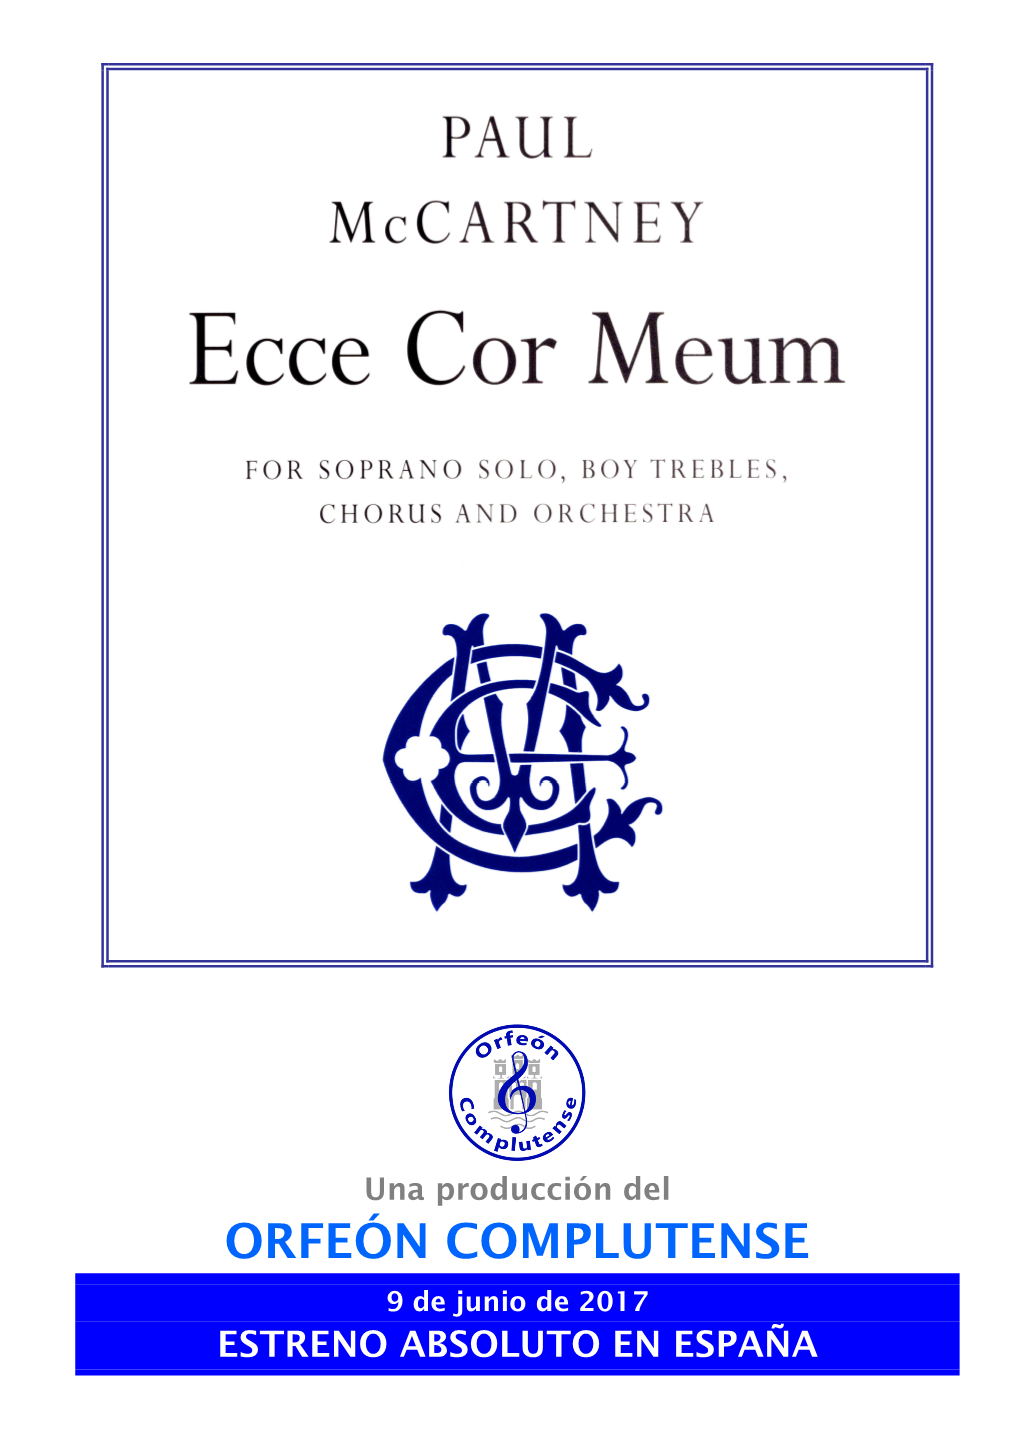 Ecce Cor Meum (Paul Mccartney)